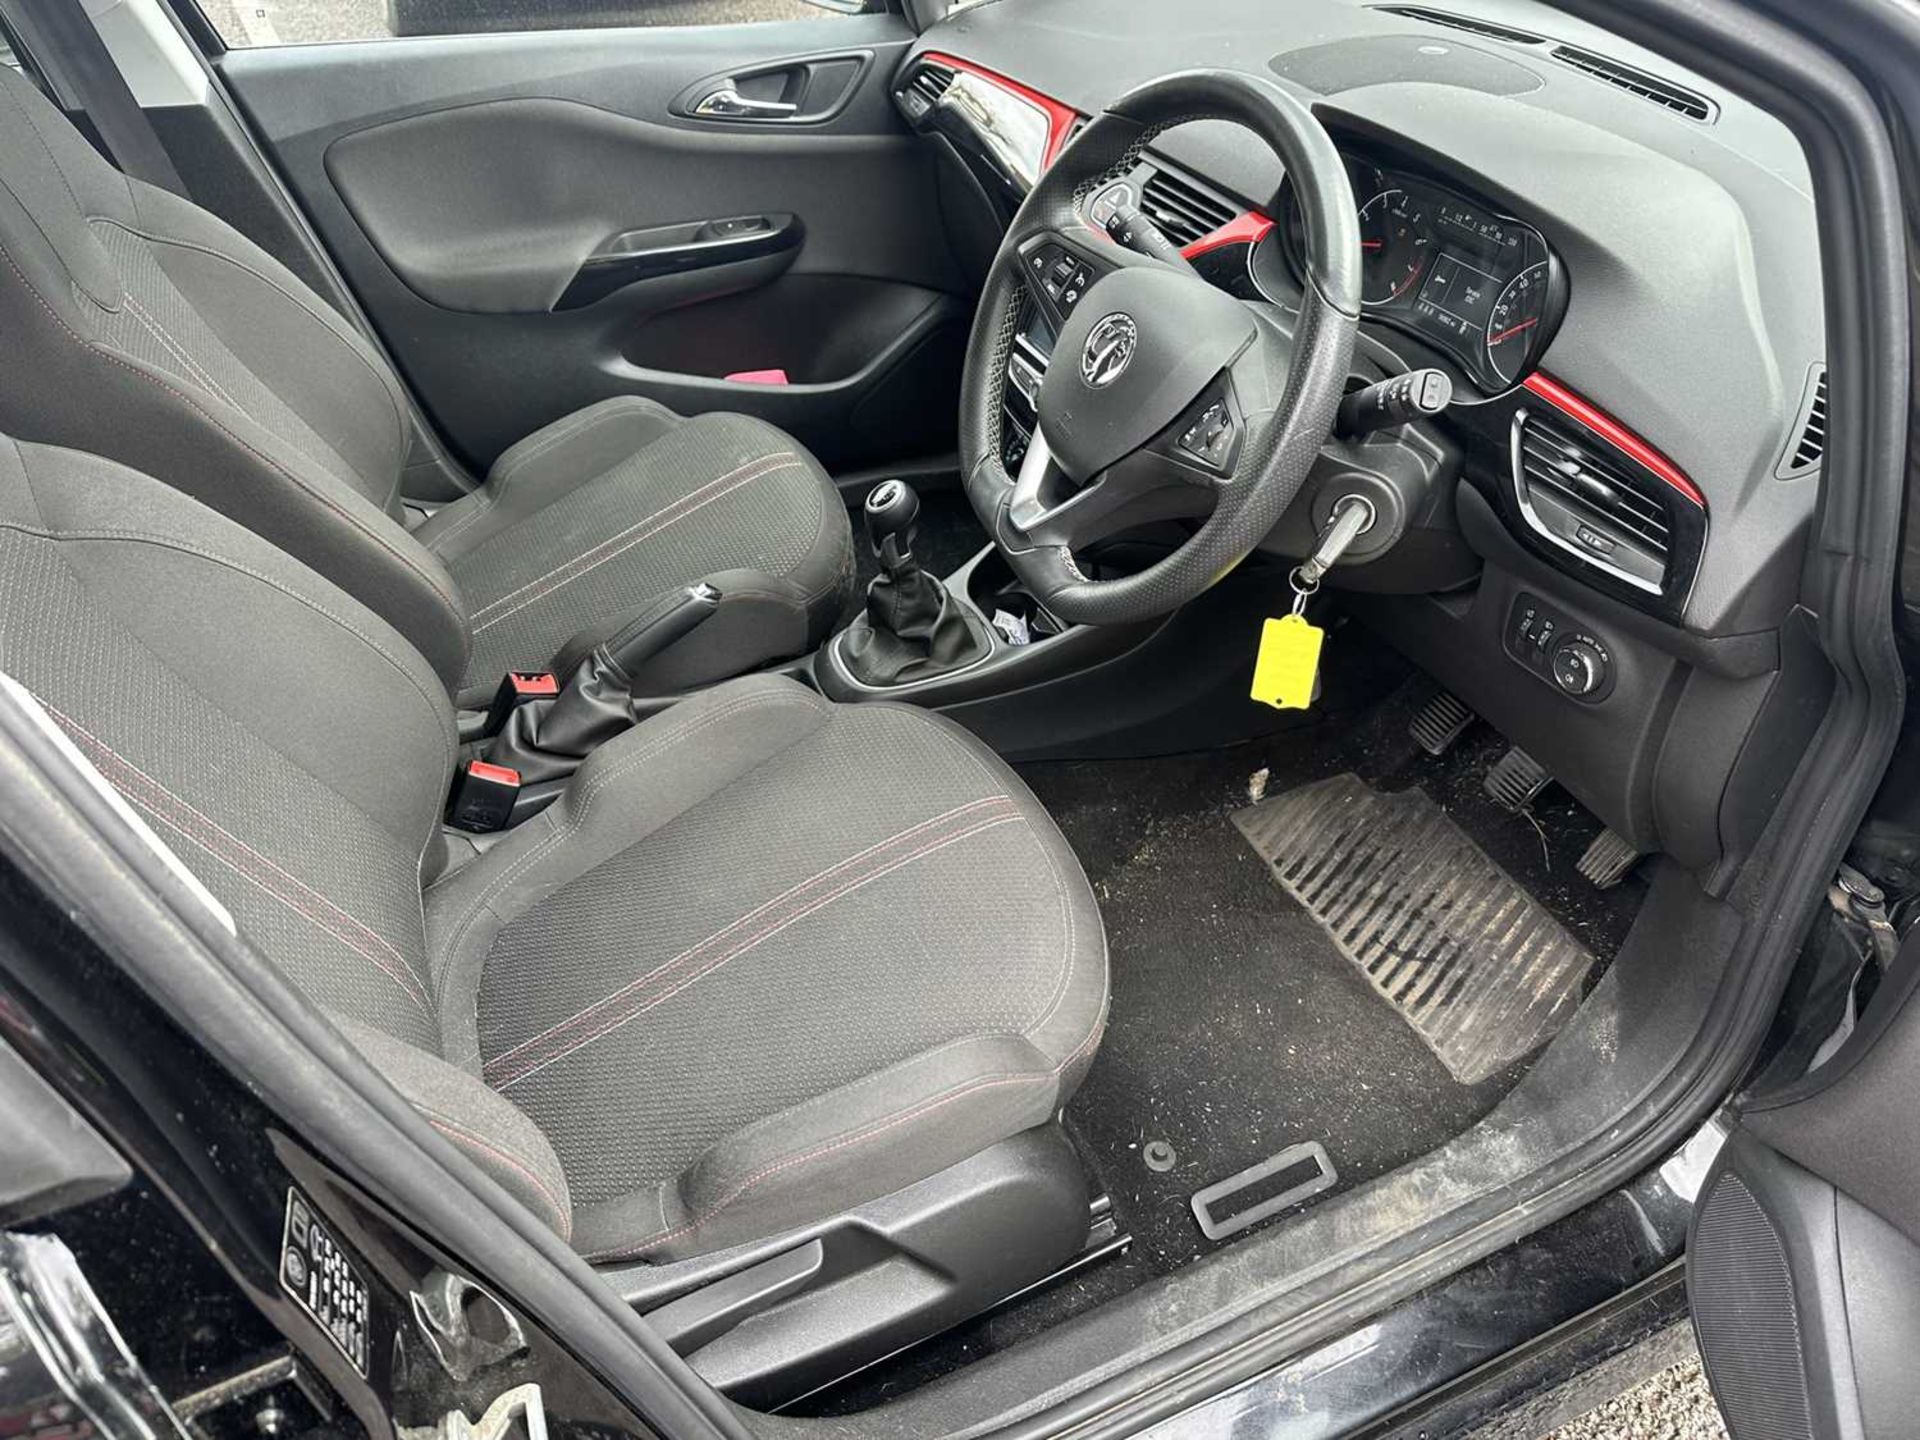 2019 Vauxhall Corsa SRI VX - Line Nav Black, 5 door hatchback, manual, reg. no. VU19 RYK - Image 12 of 15